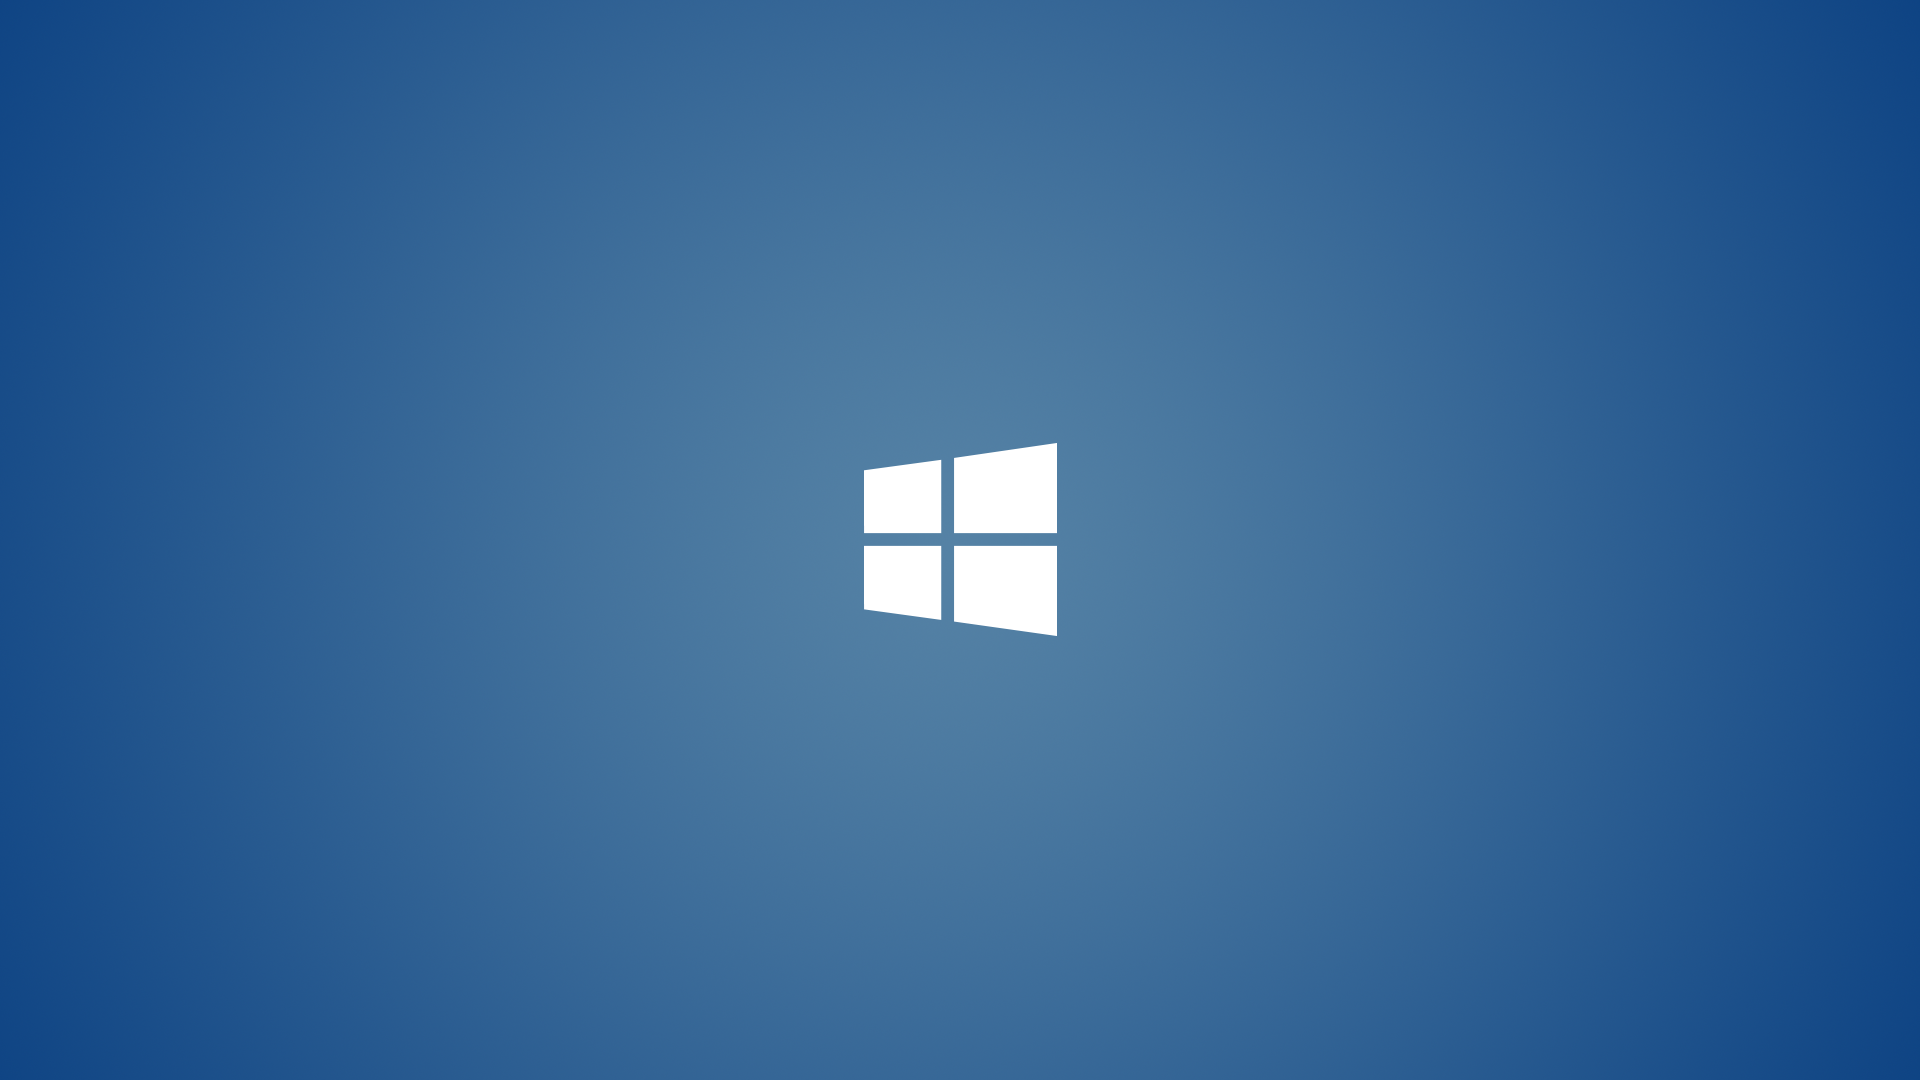 General 1920x1080 minimalism Windows 8 technology logo Microsoft Windows simple background blue background Windows 10 operating system